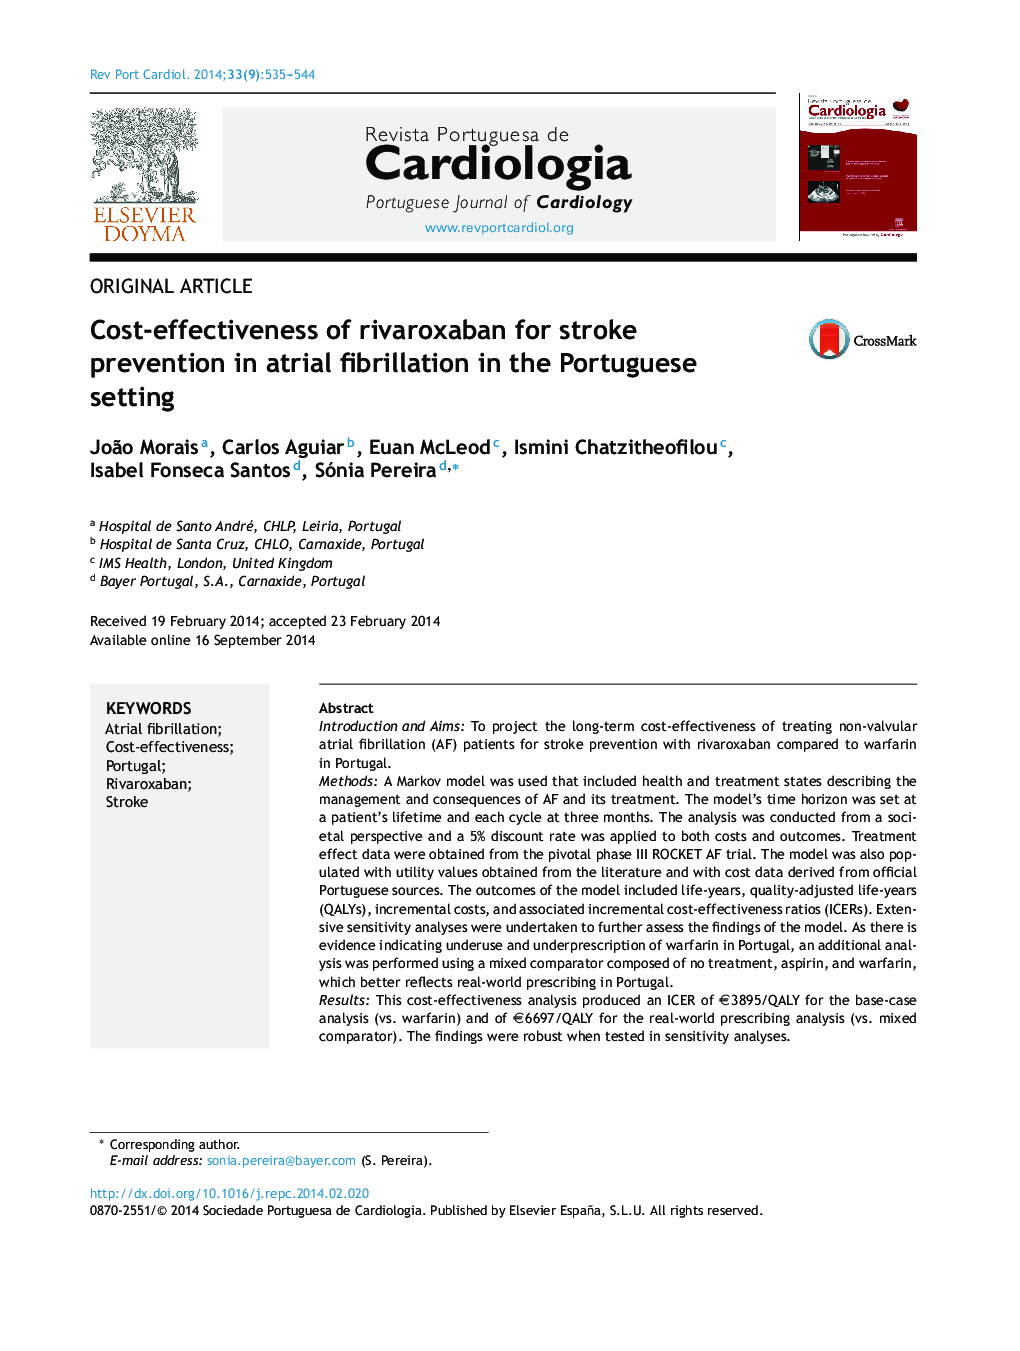 Cost-effectiveness of rivaroxaban for stroke prevention in atrial fibrillation in the Portuguese setting